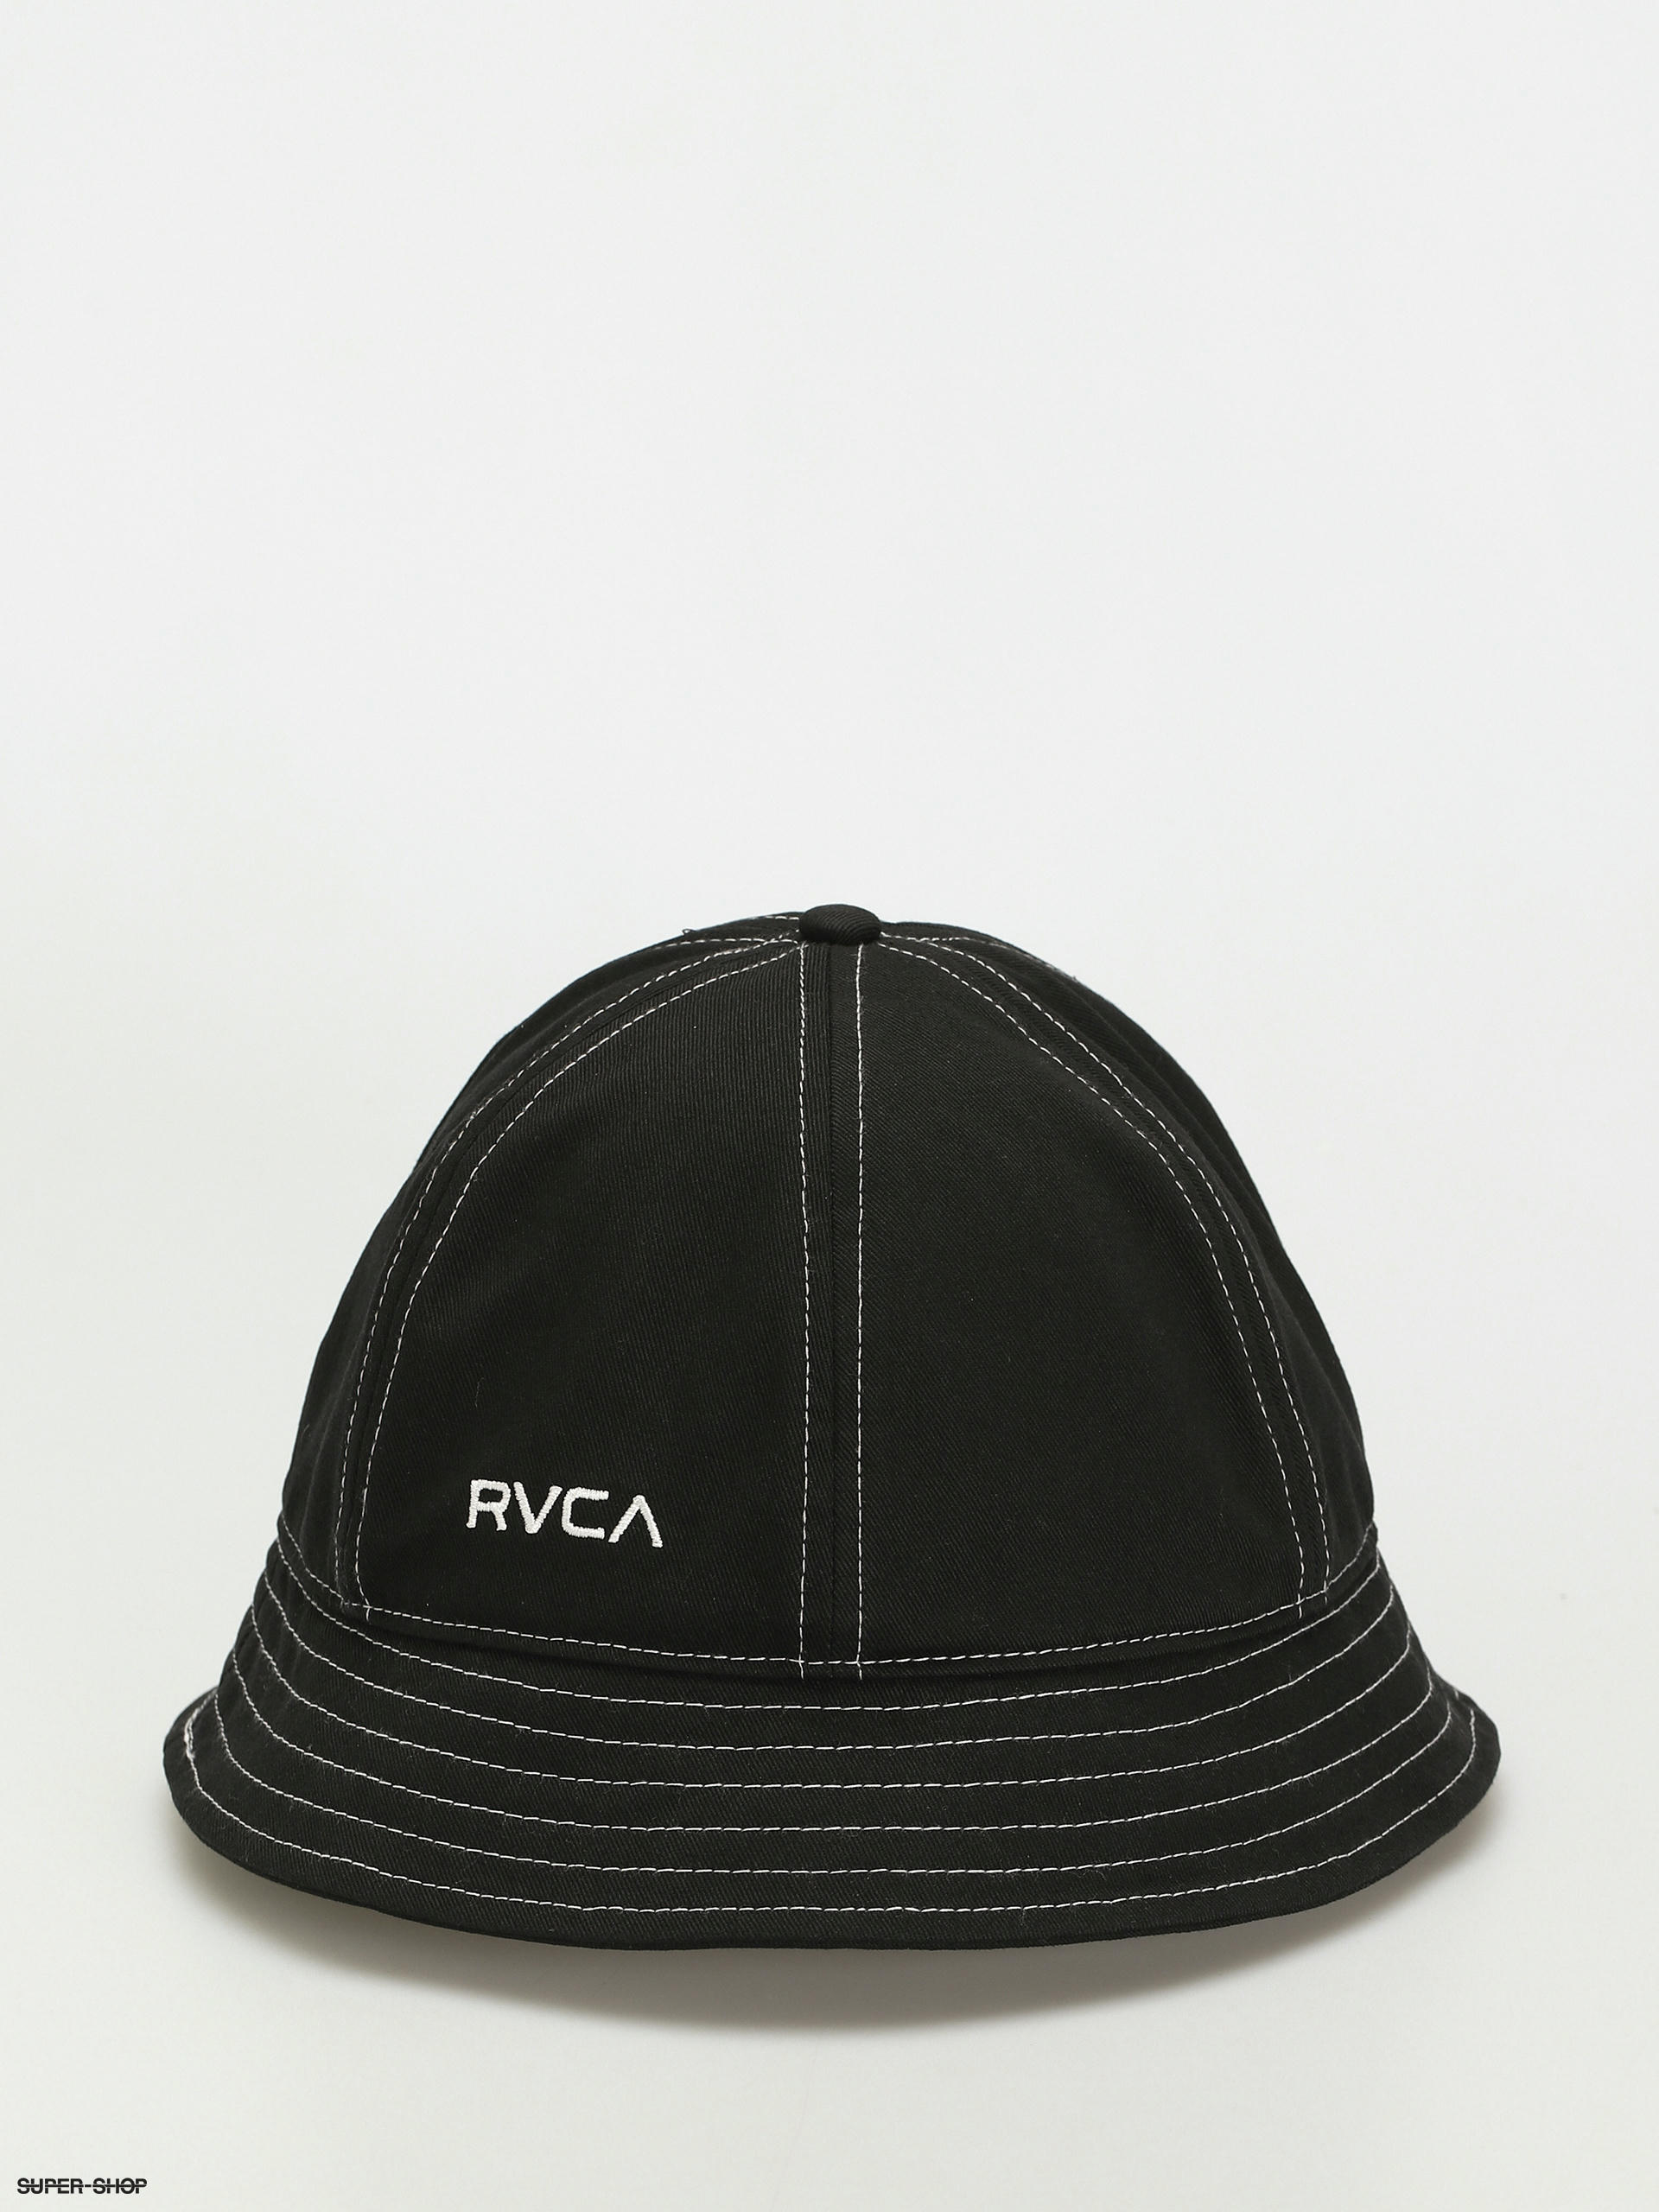 https://static.super-shop.com/1310568-rvca-throwing-shade-hat-wmn-rvca-black.jpg?w=1920